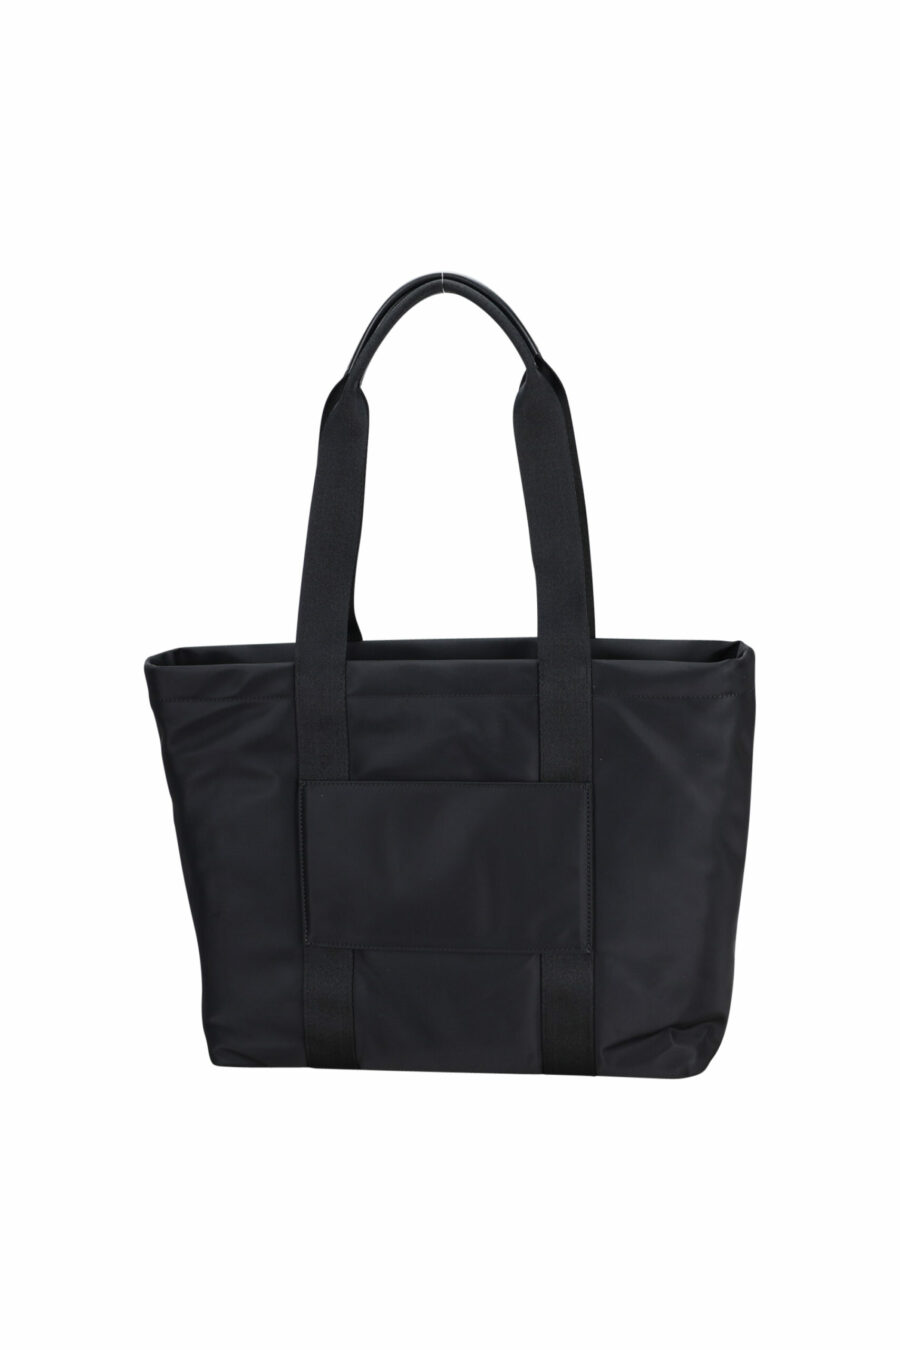 Black nylon tote bag with mini logo "karl" - 8720744417651 2 scaled